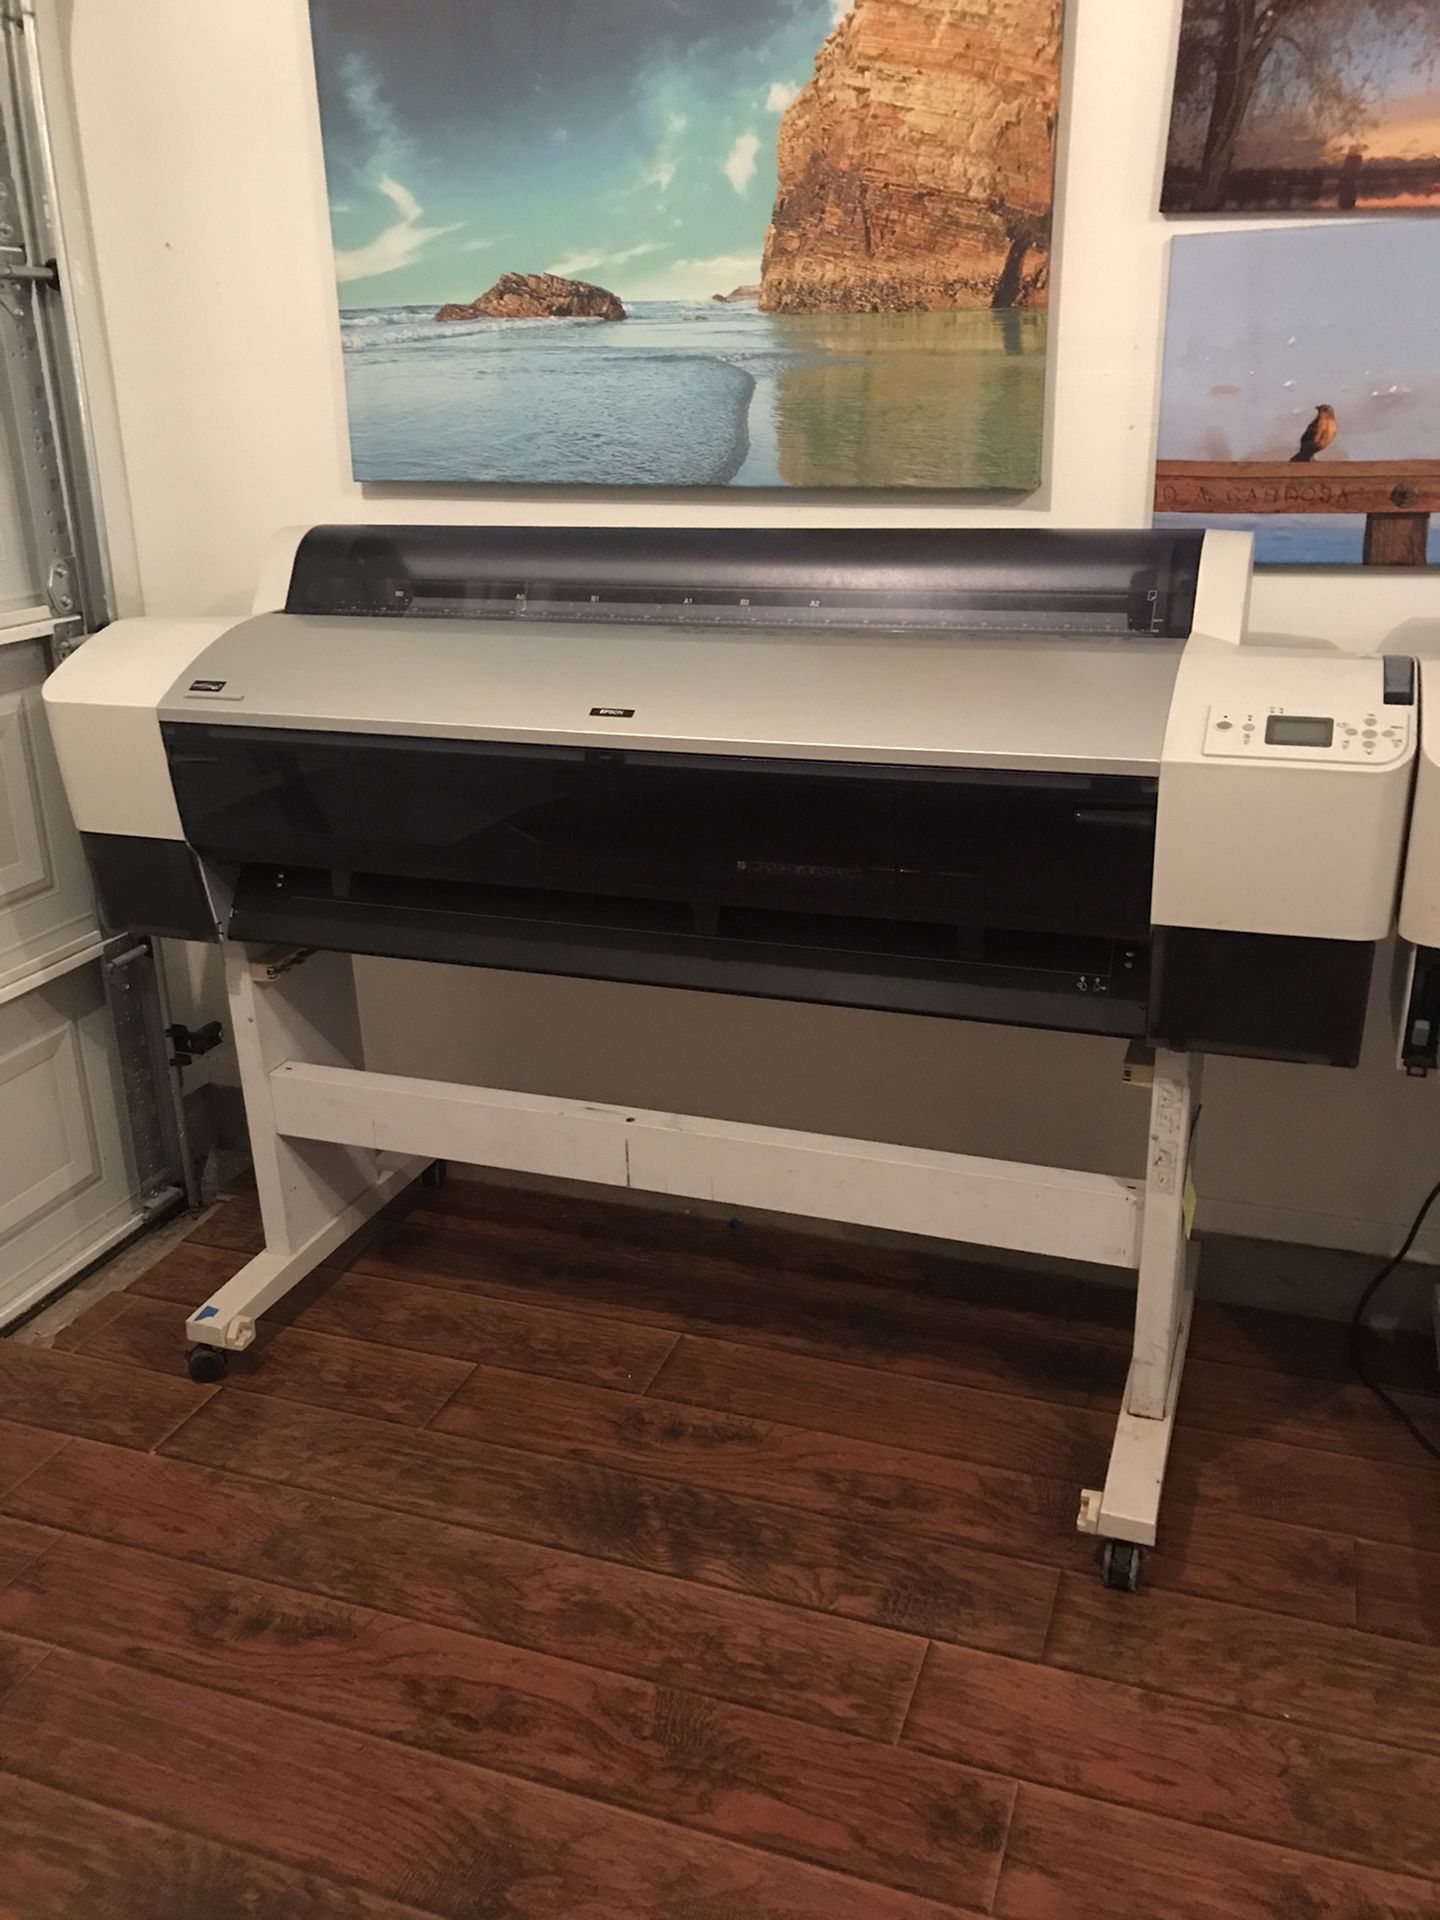 Epson Stylus Pro 9800 44” Large Format Printer (Needs New Printhead)